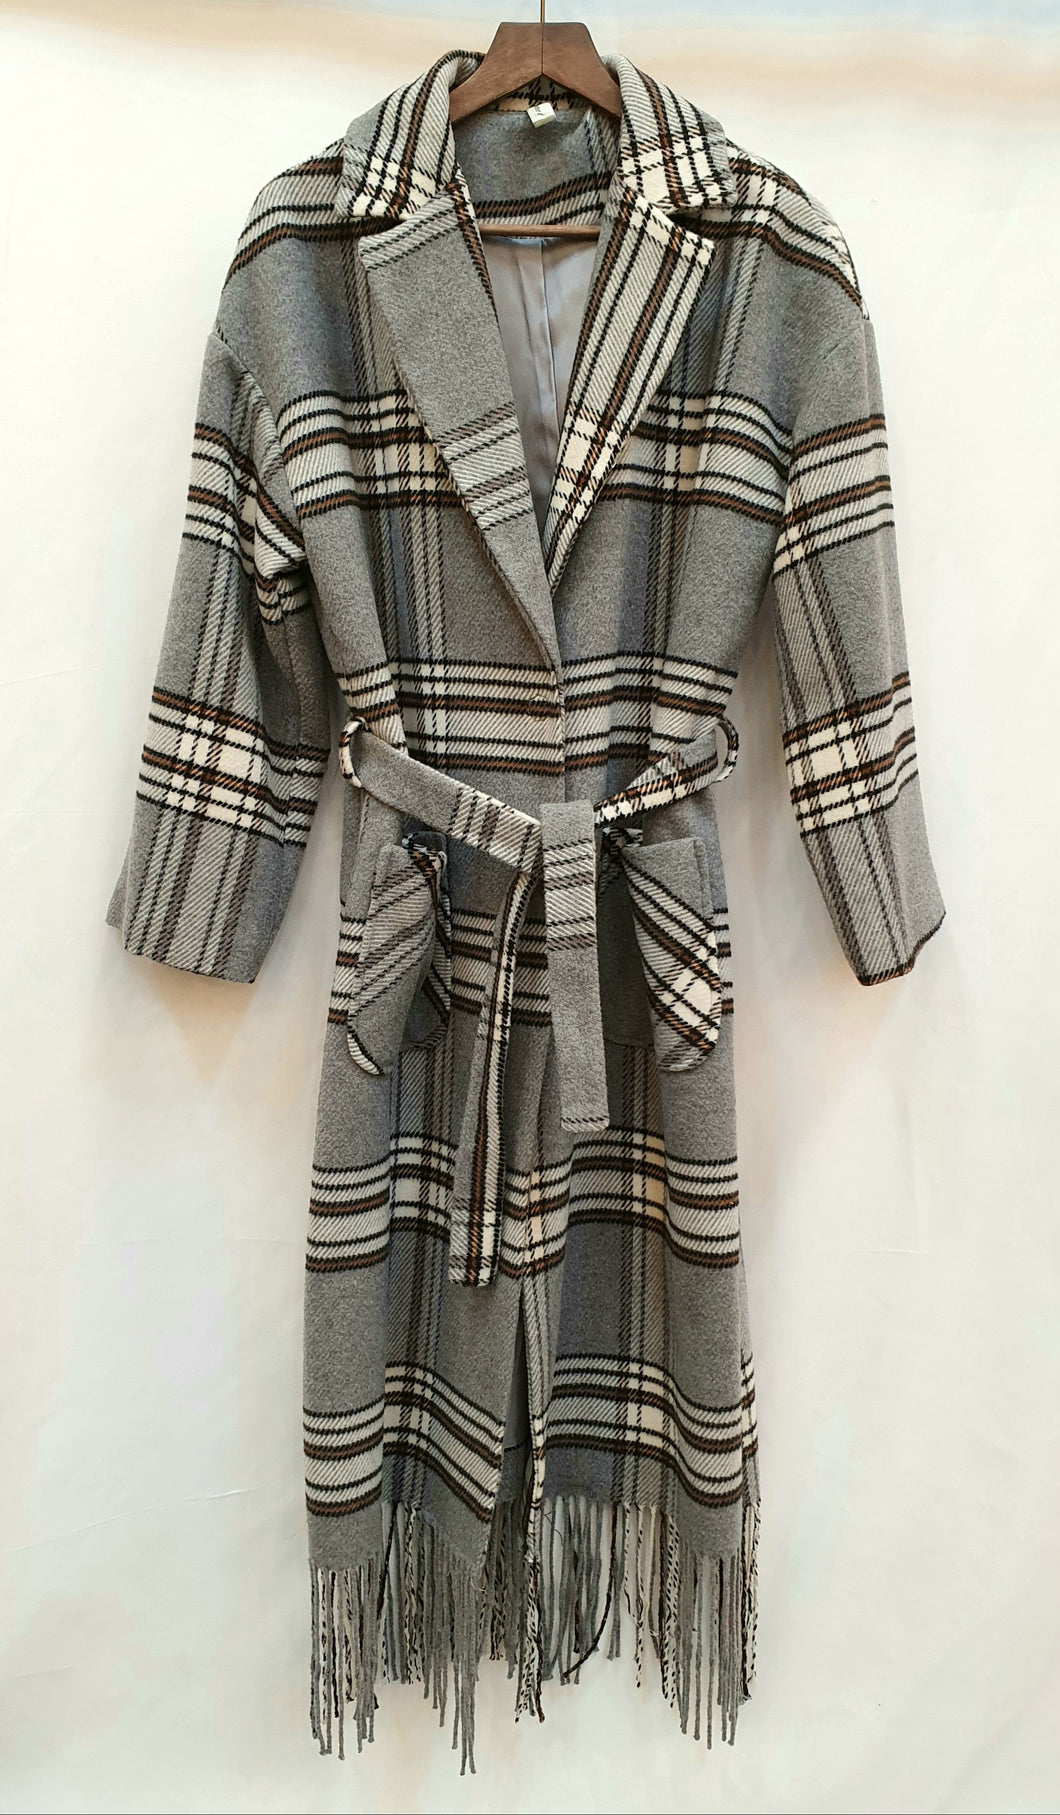 Checkered Coat